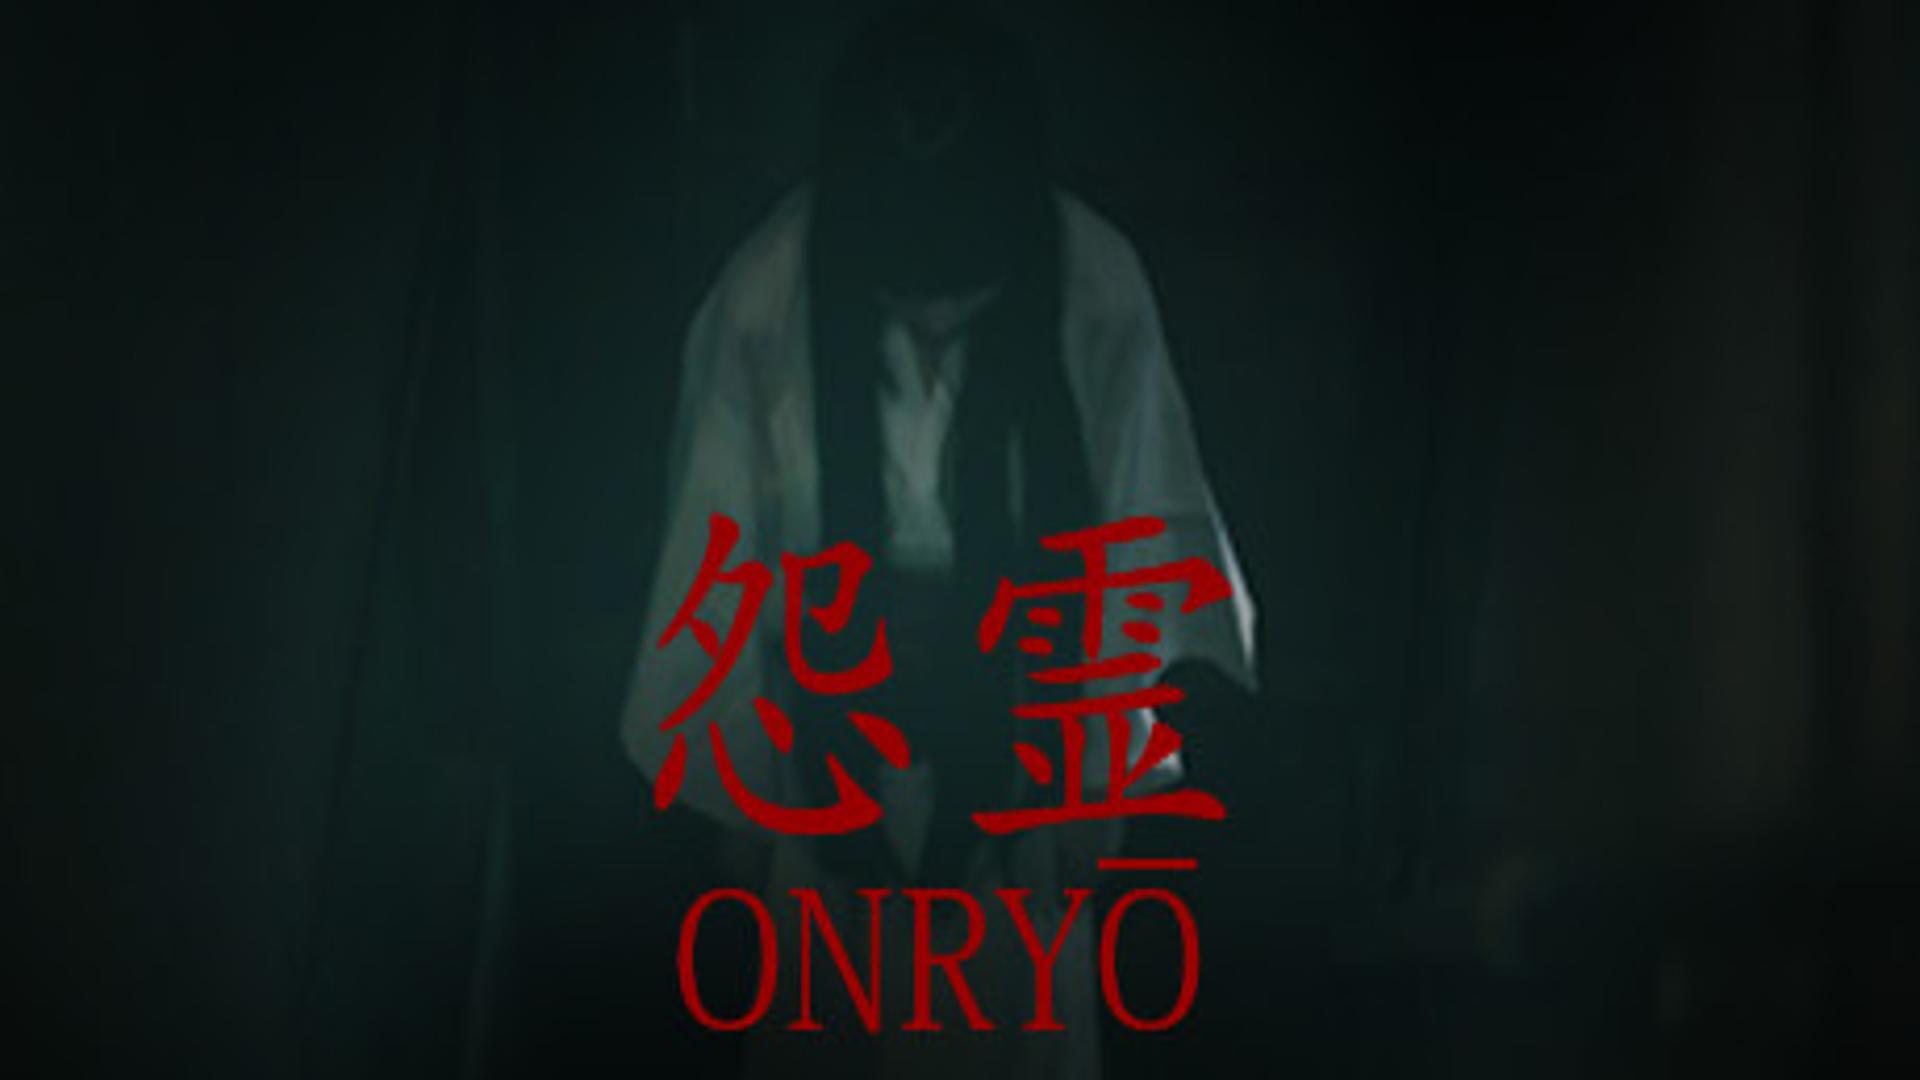 Onryo | 怨霊- Free Download (V.1.0)